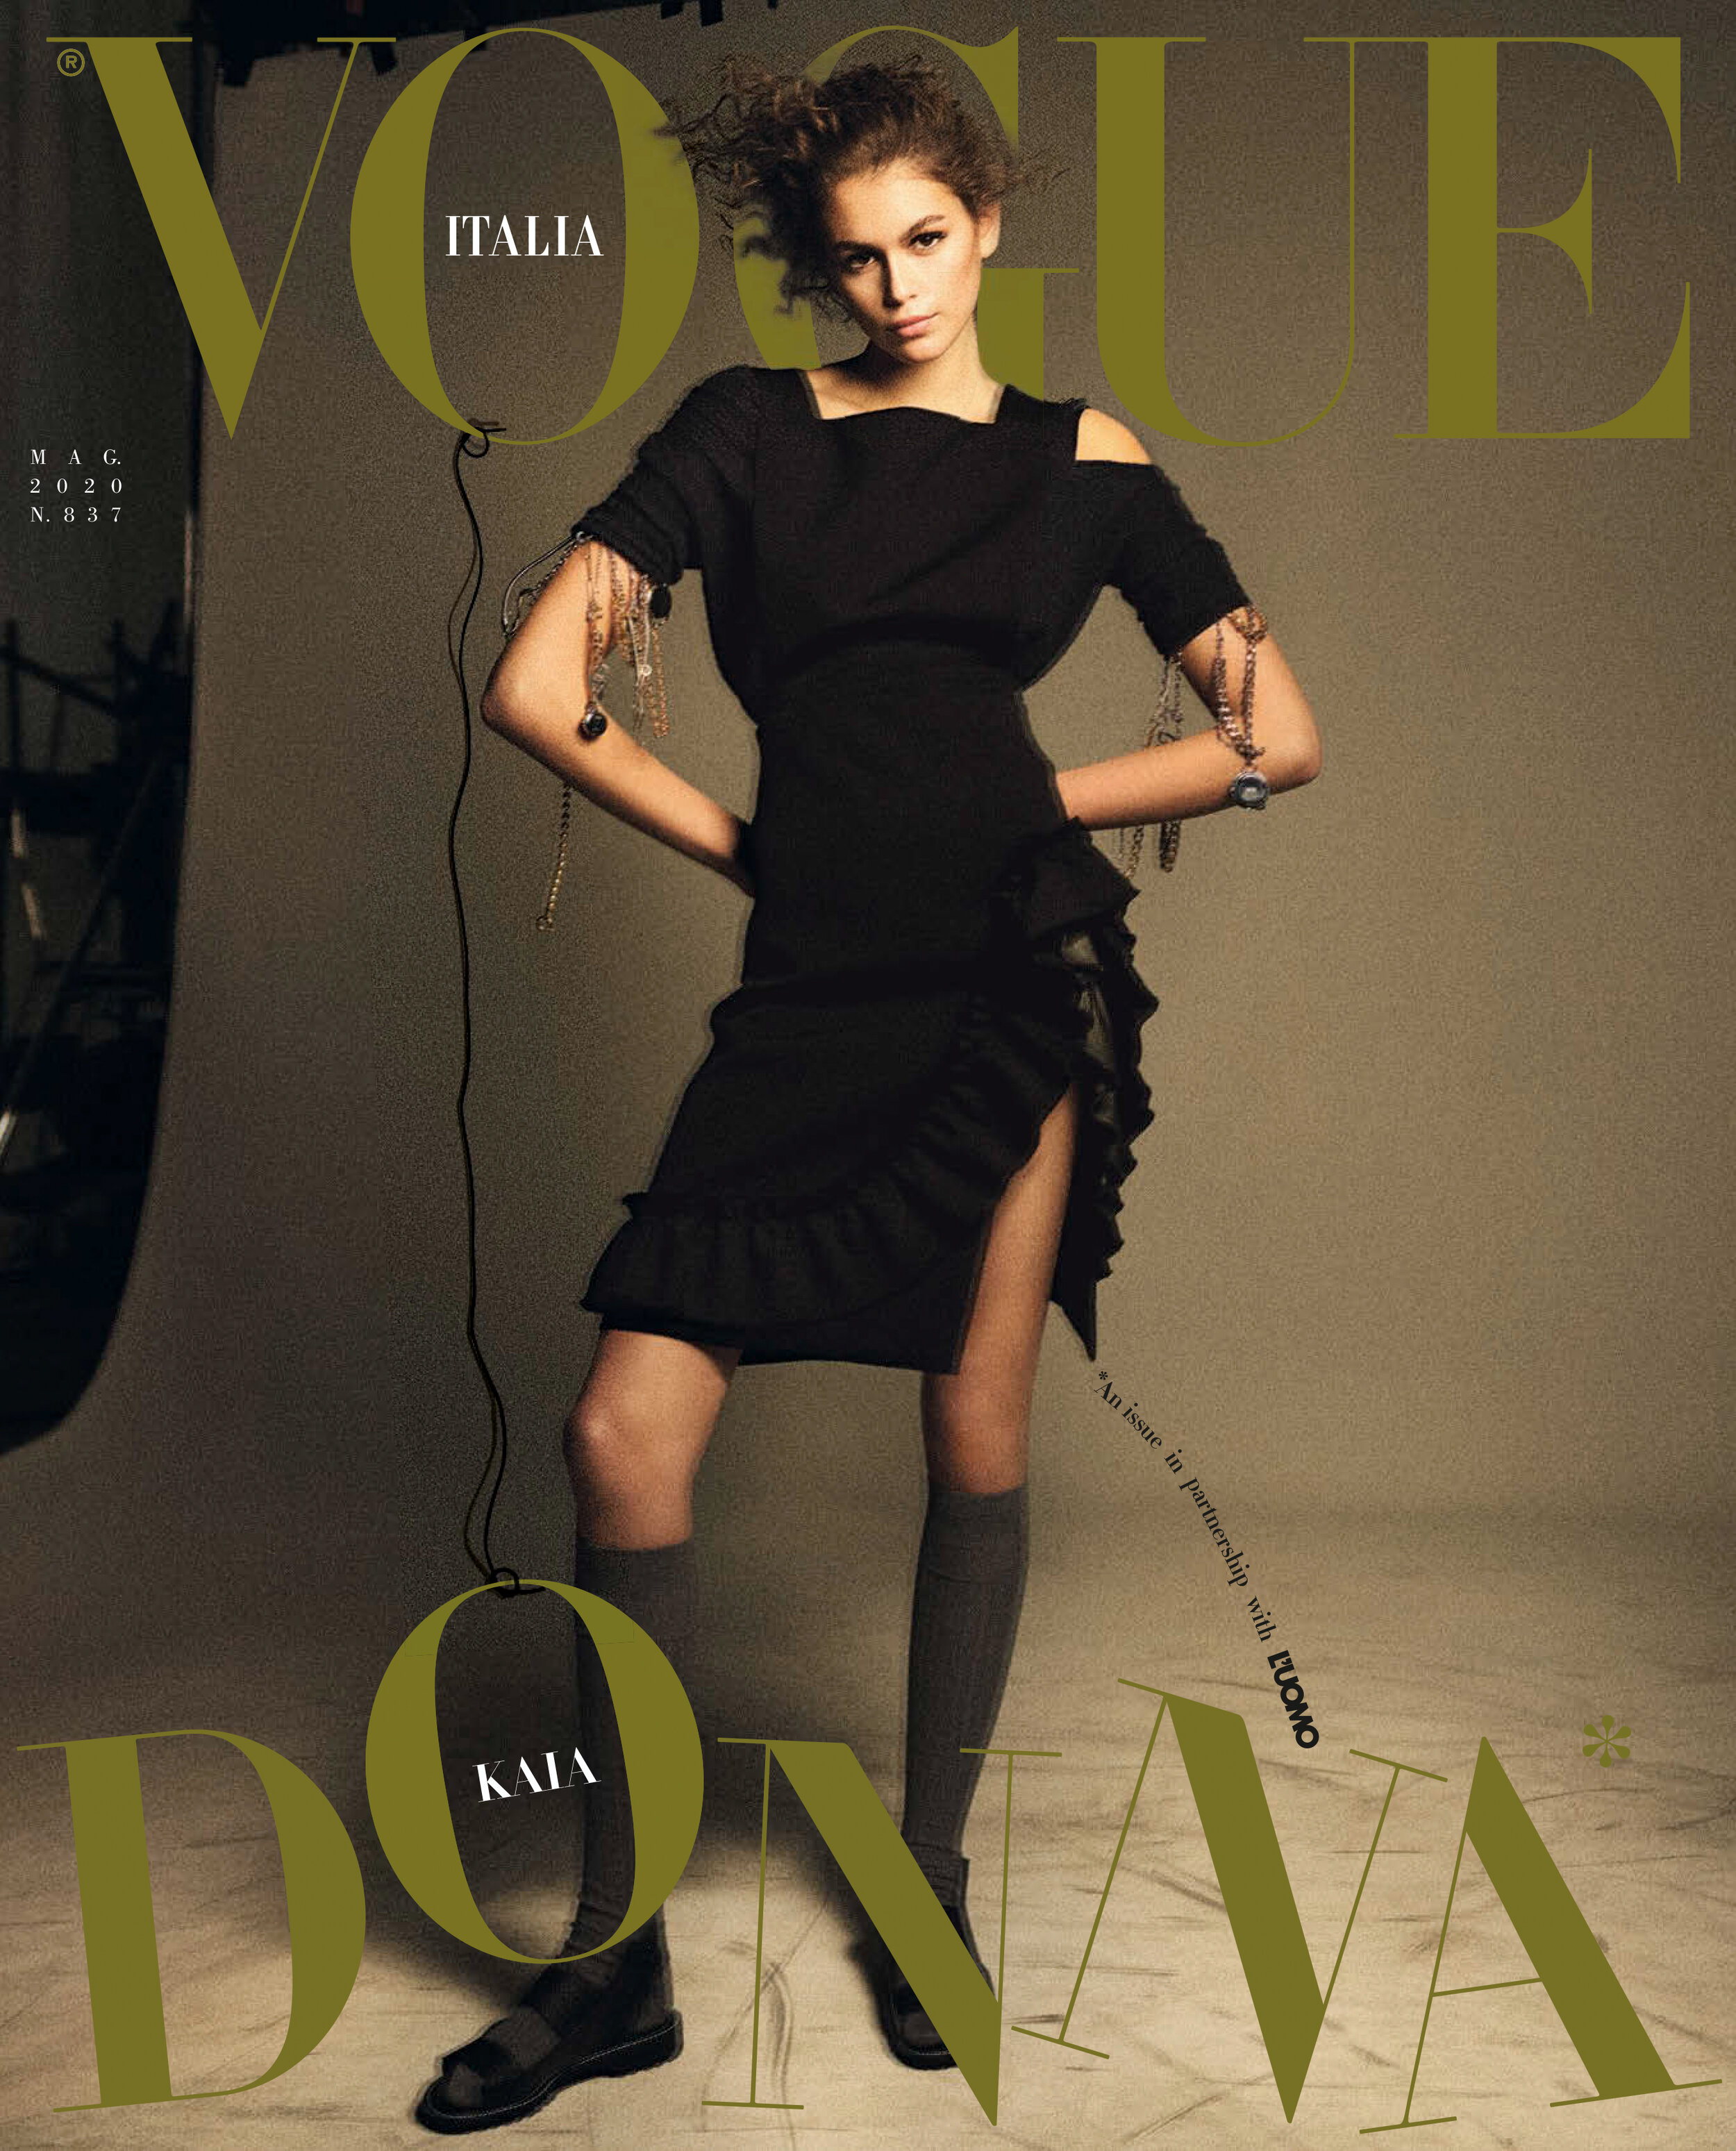 Kaia Gerber by Karim Sadli for Vogue Italia May 2020 (8).jpg